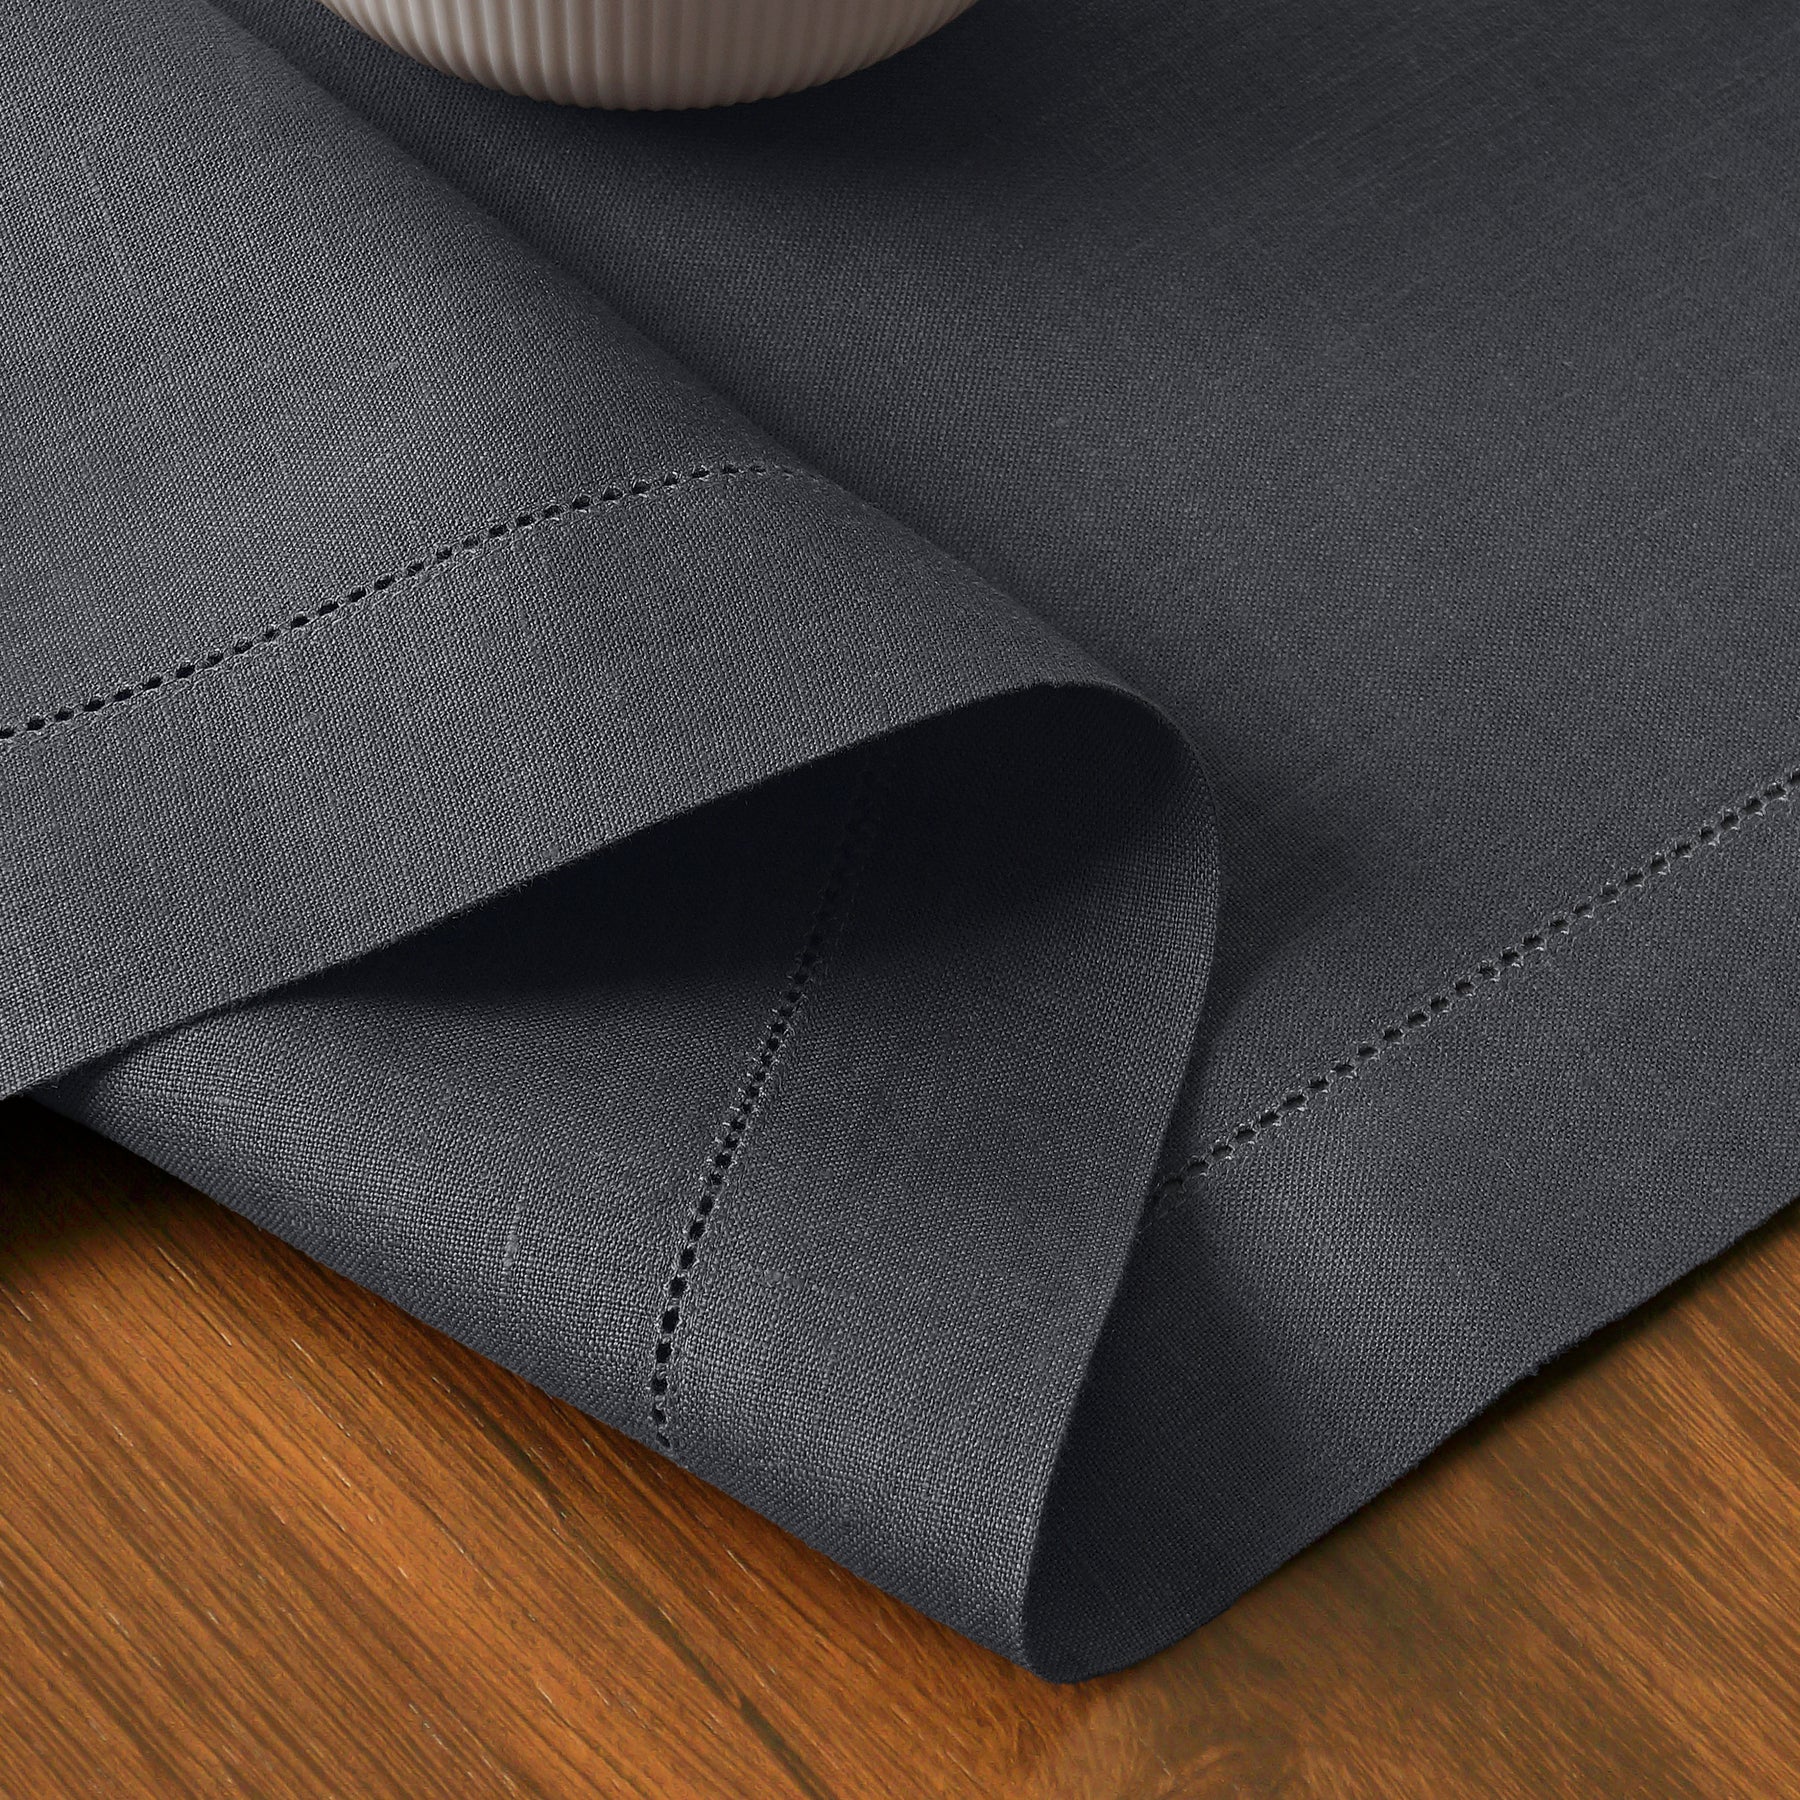 Charcoal Grey Linen Table Runner - Hemstitch